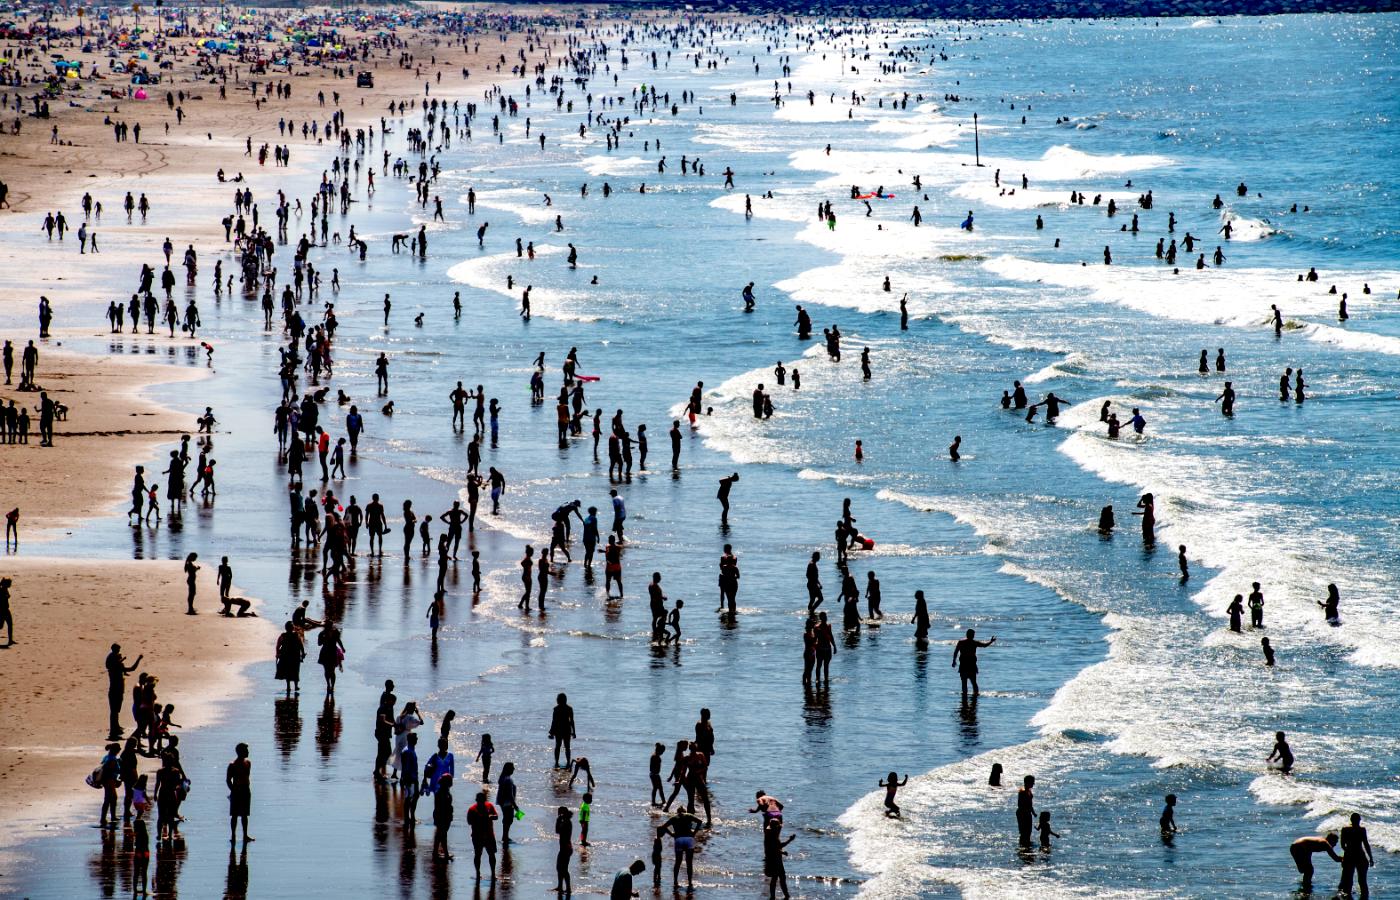 Plaża pełna mimo pandemii koronawirusa. Lipiec 2020 r.